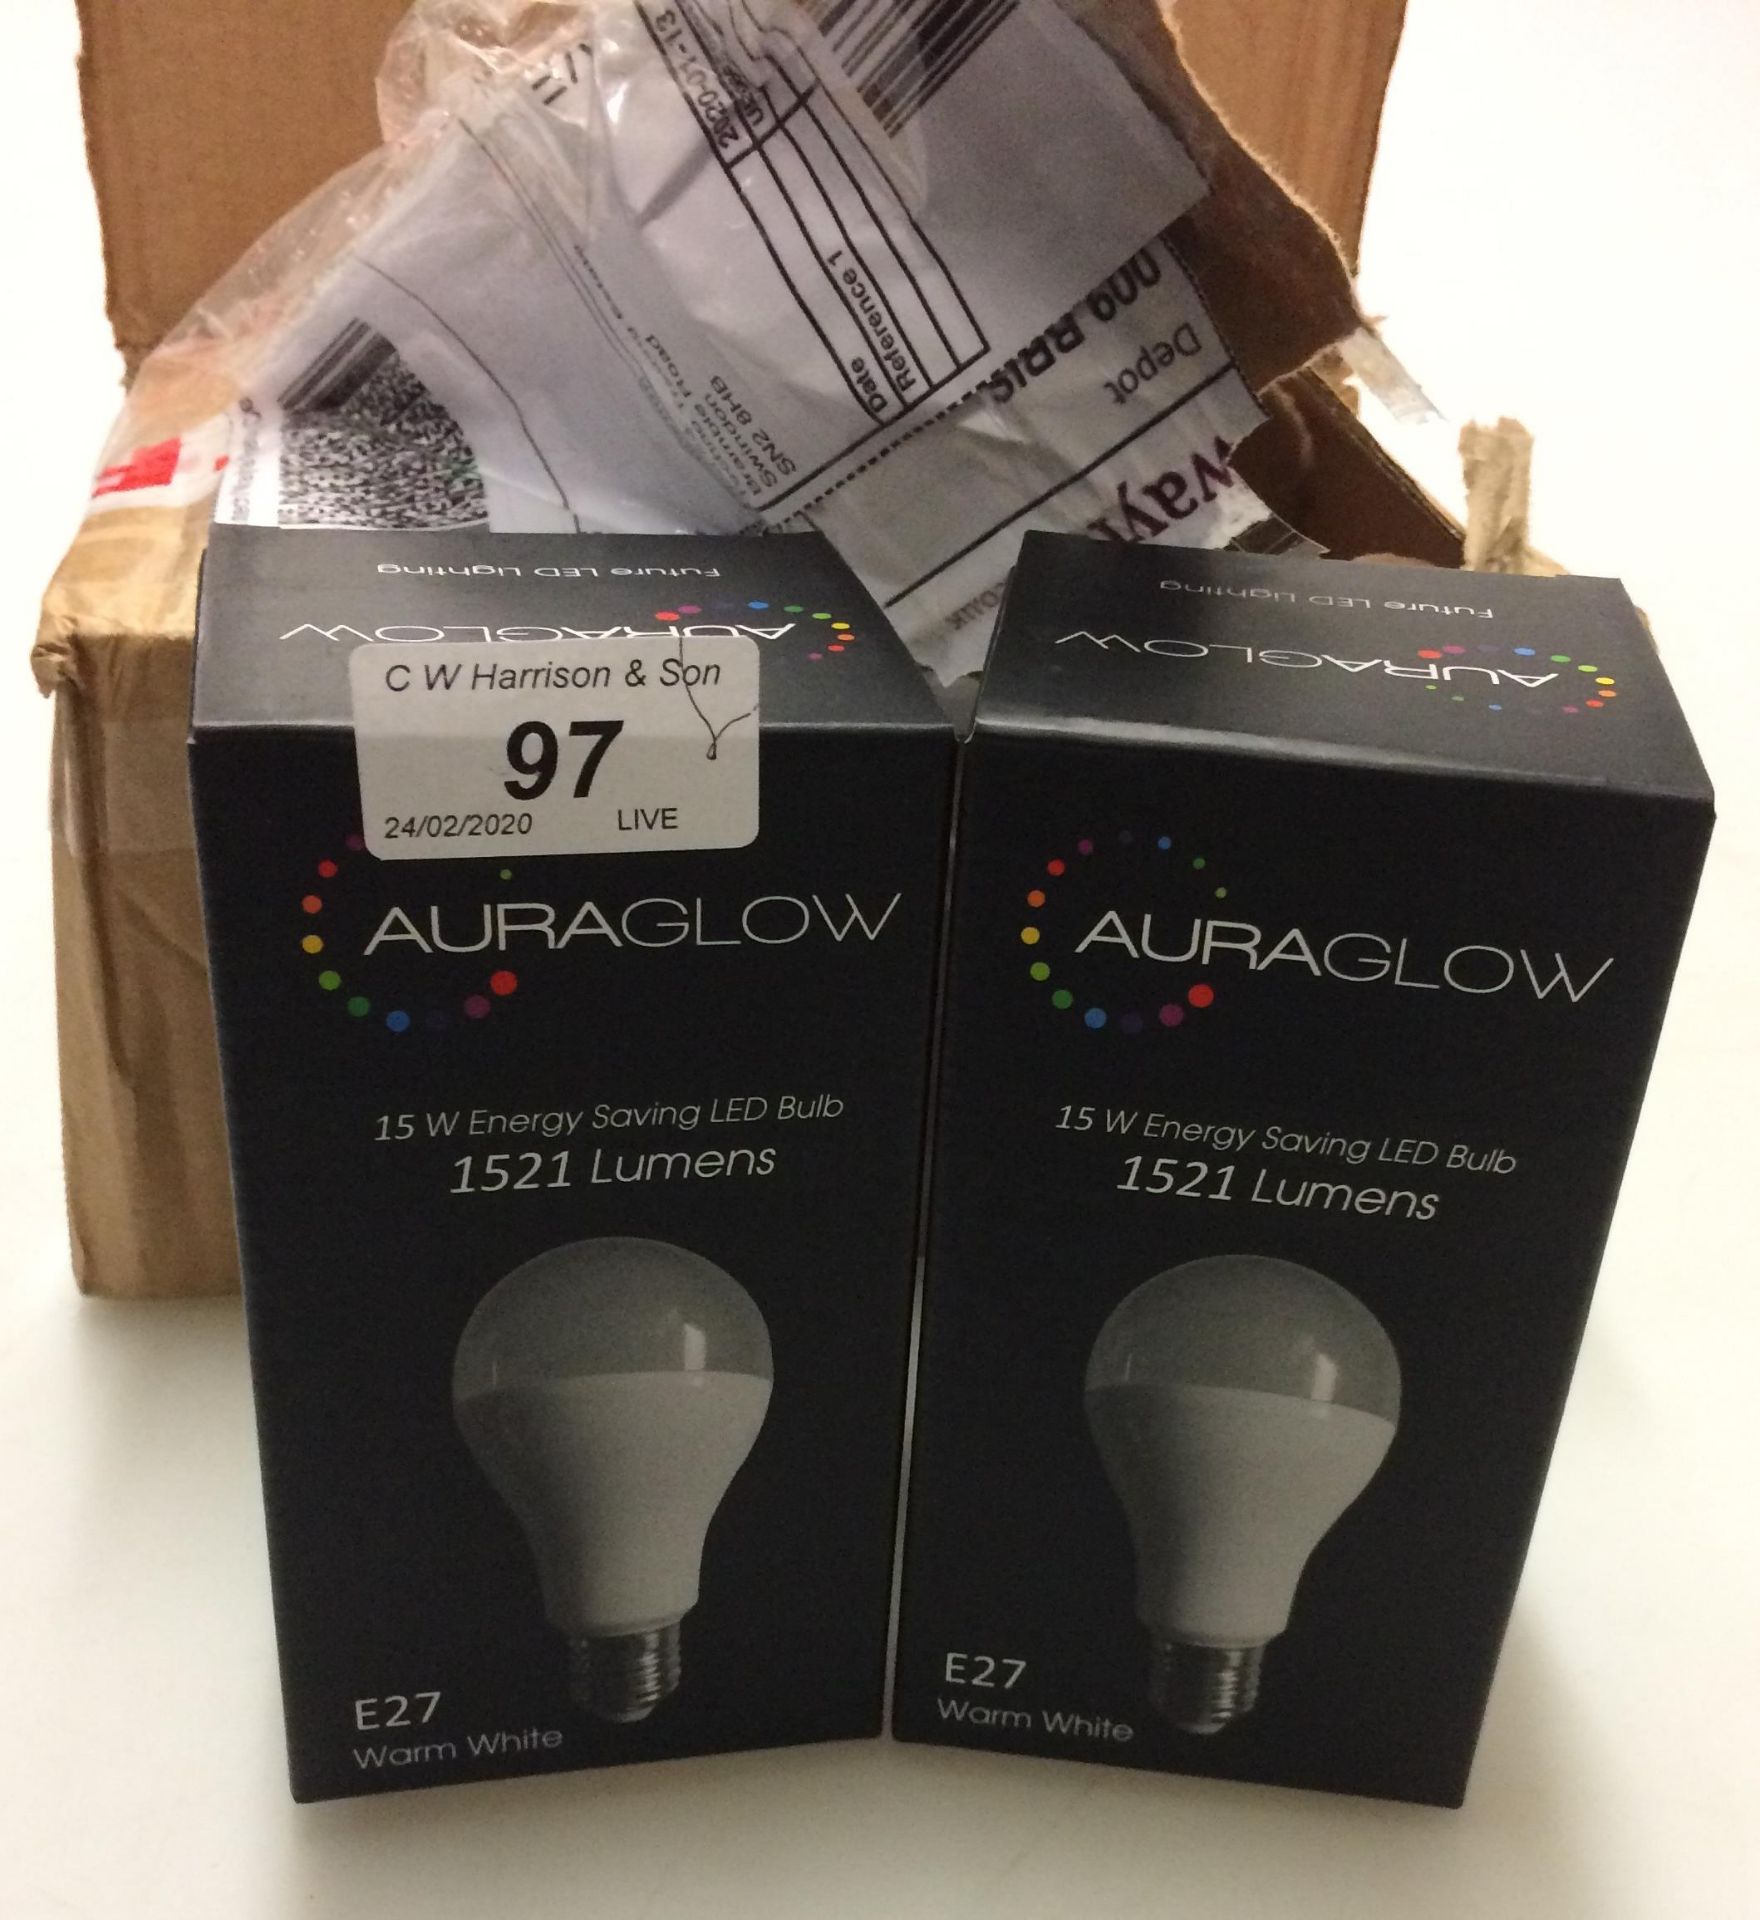 2 x Furlow 15W E27 LED Light Bulbs by Symple Stuff - Image 2 of 2